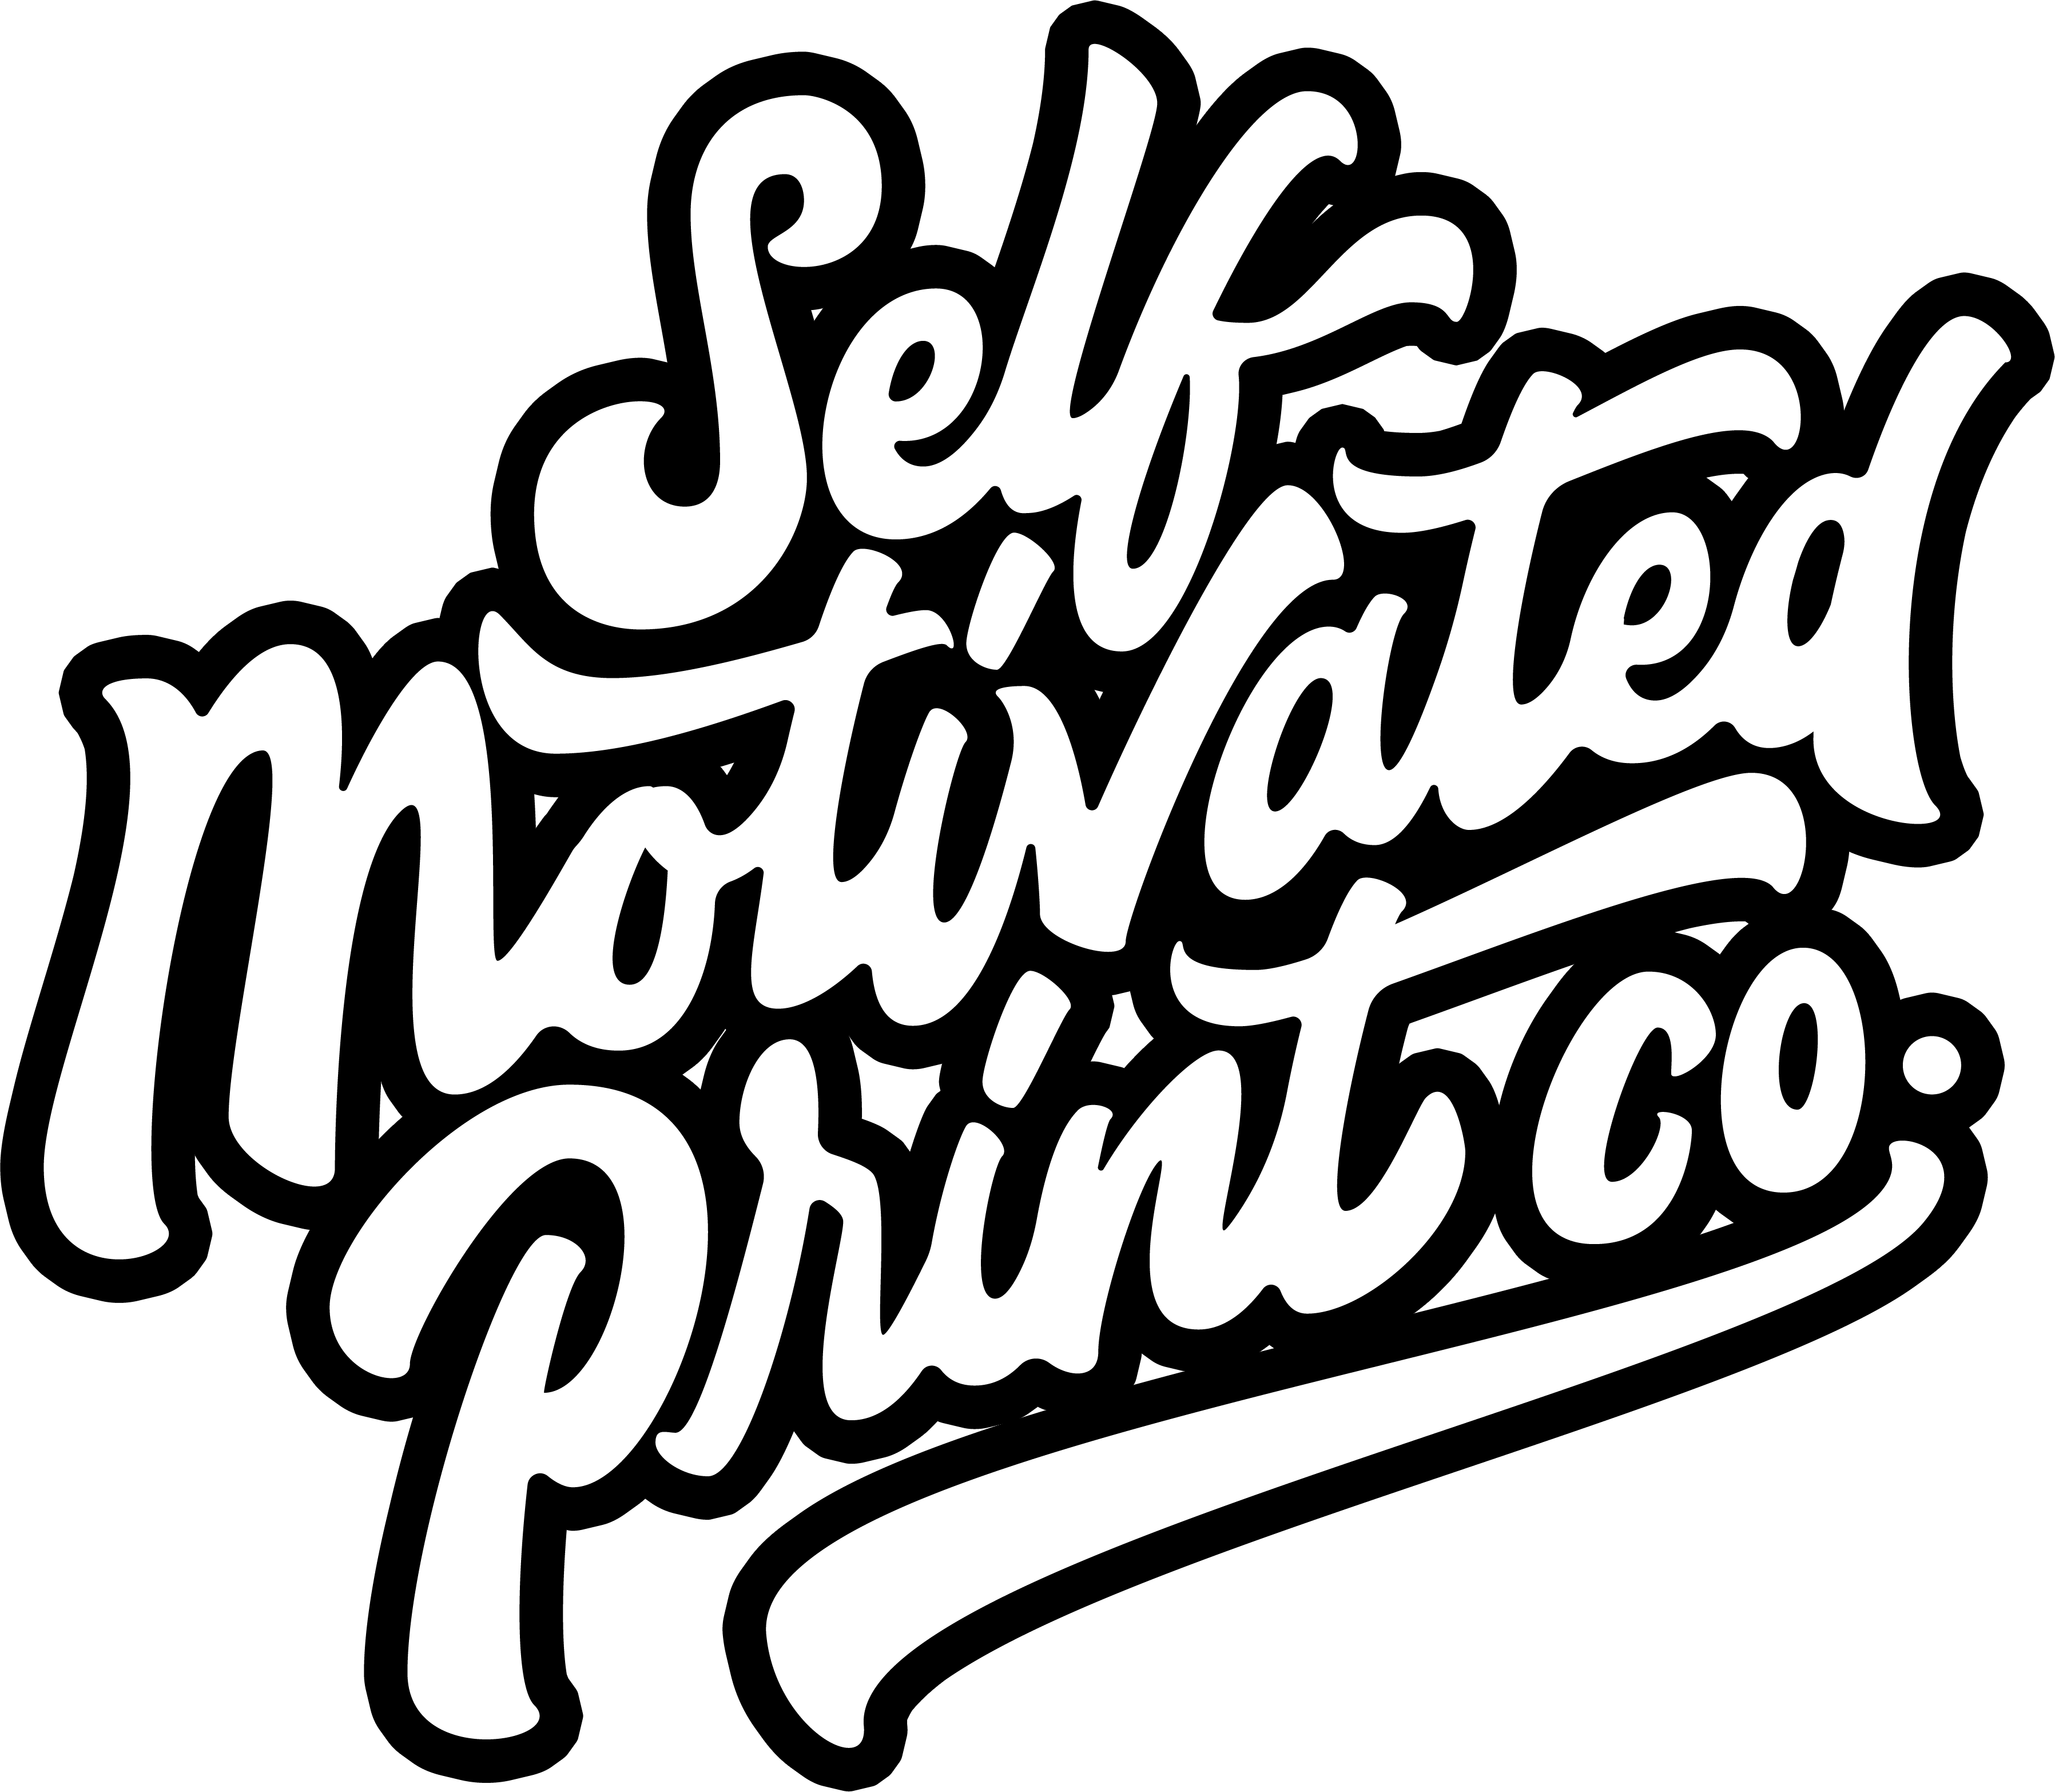 Self Motivated Print Co.